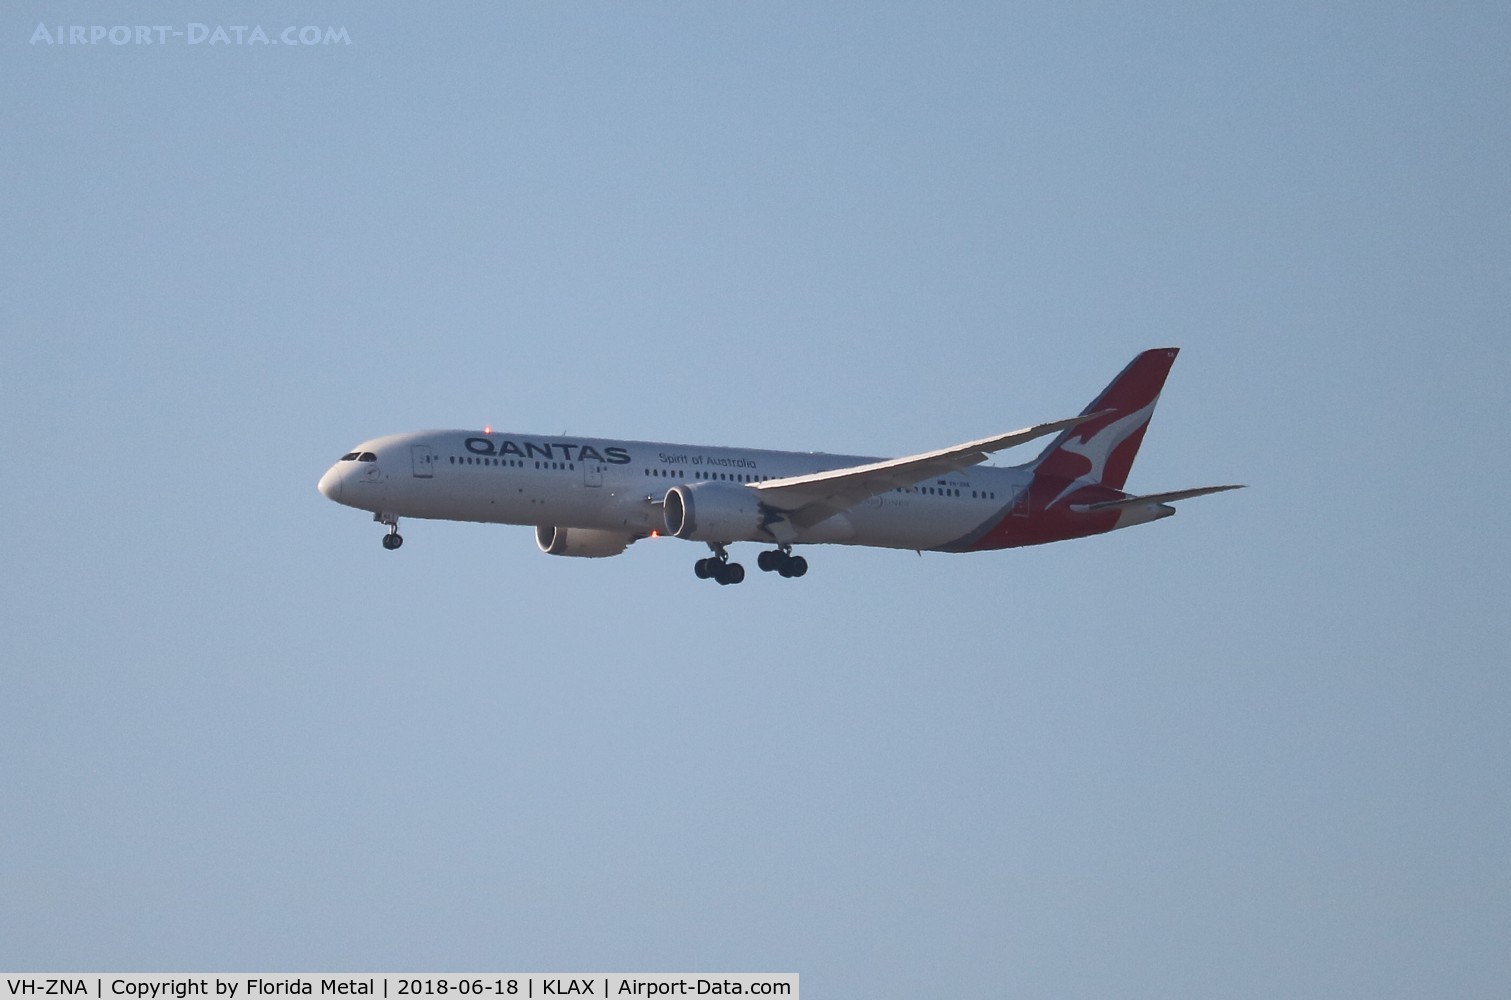 VH-ZNA, 2017 Boeing 787-9 Dreamliner C/N 39038, Qantas 787-9